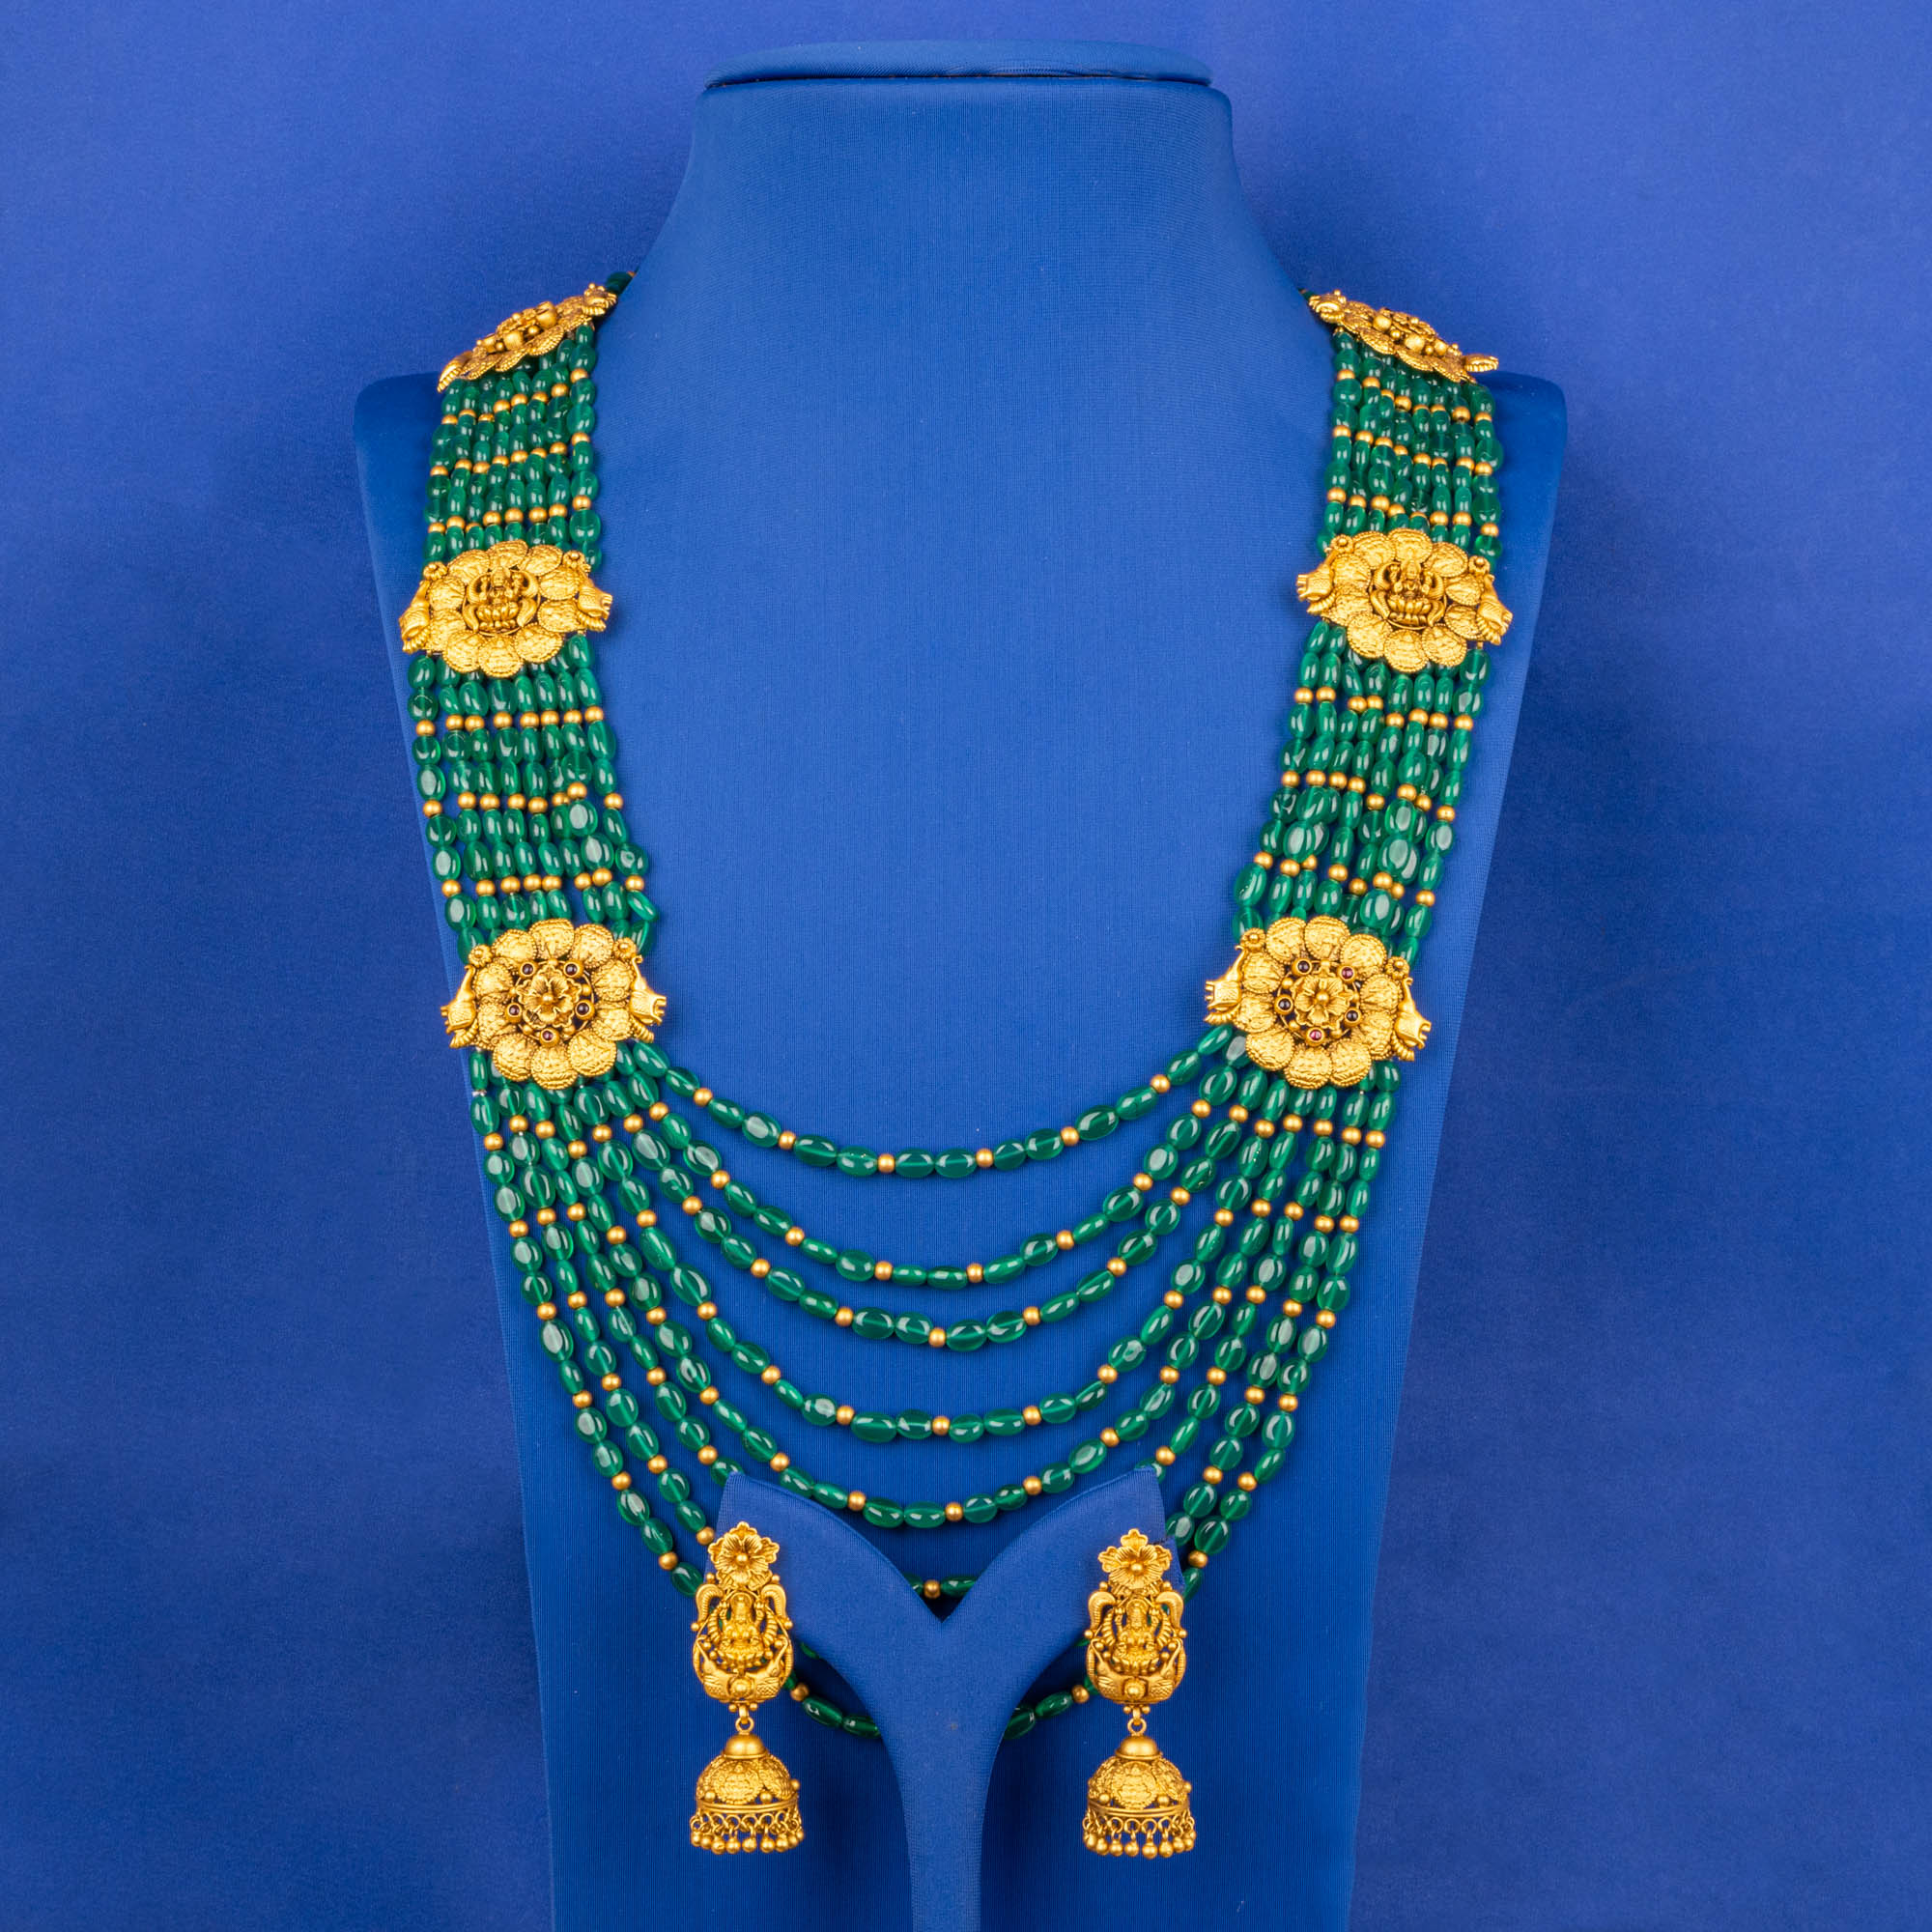 Majestic Treasures: Handmade 22K Gold 'Antique' Necklace & Earrings Set